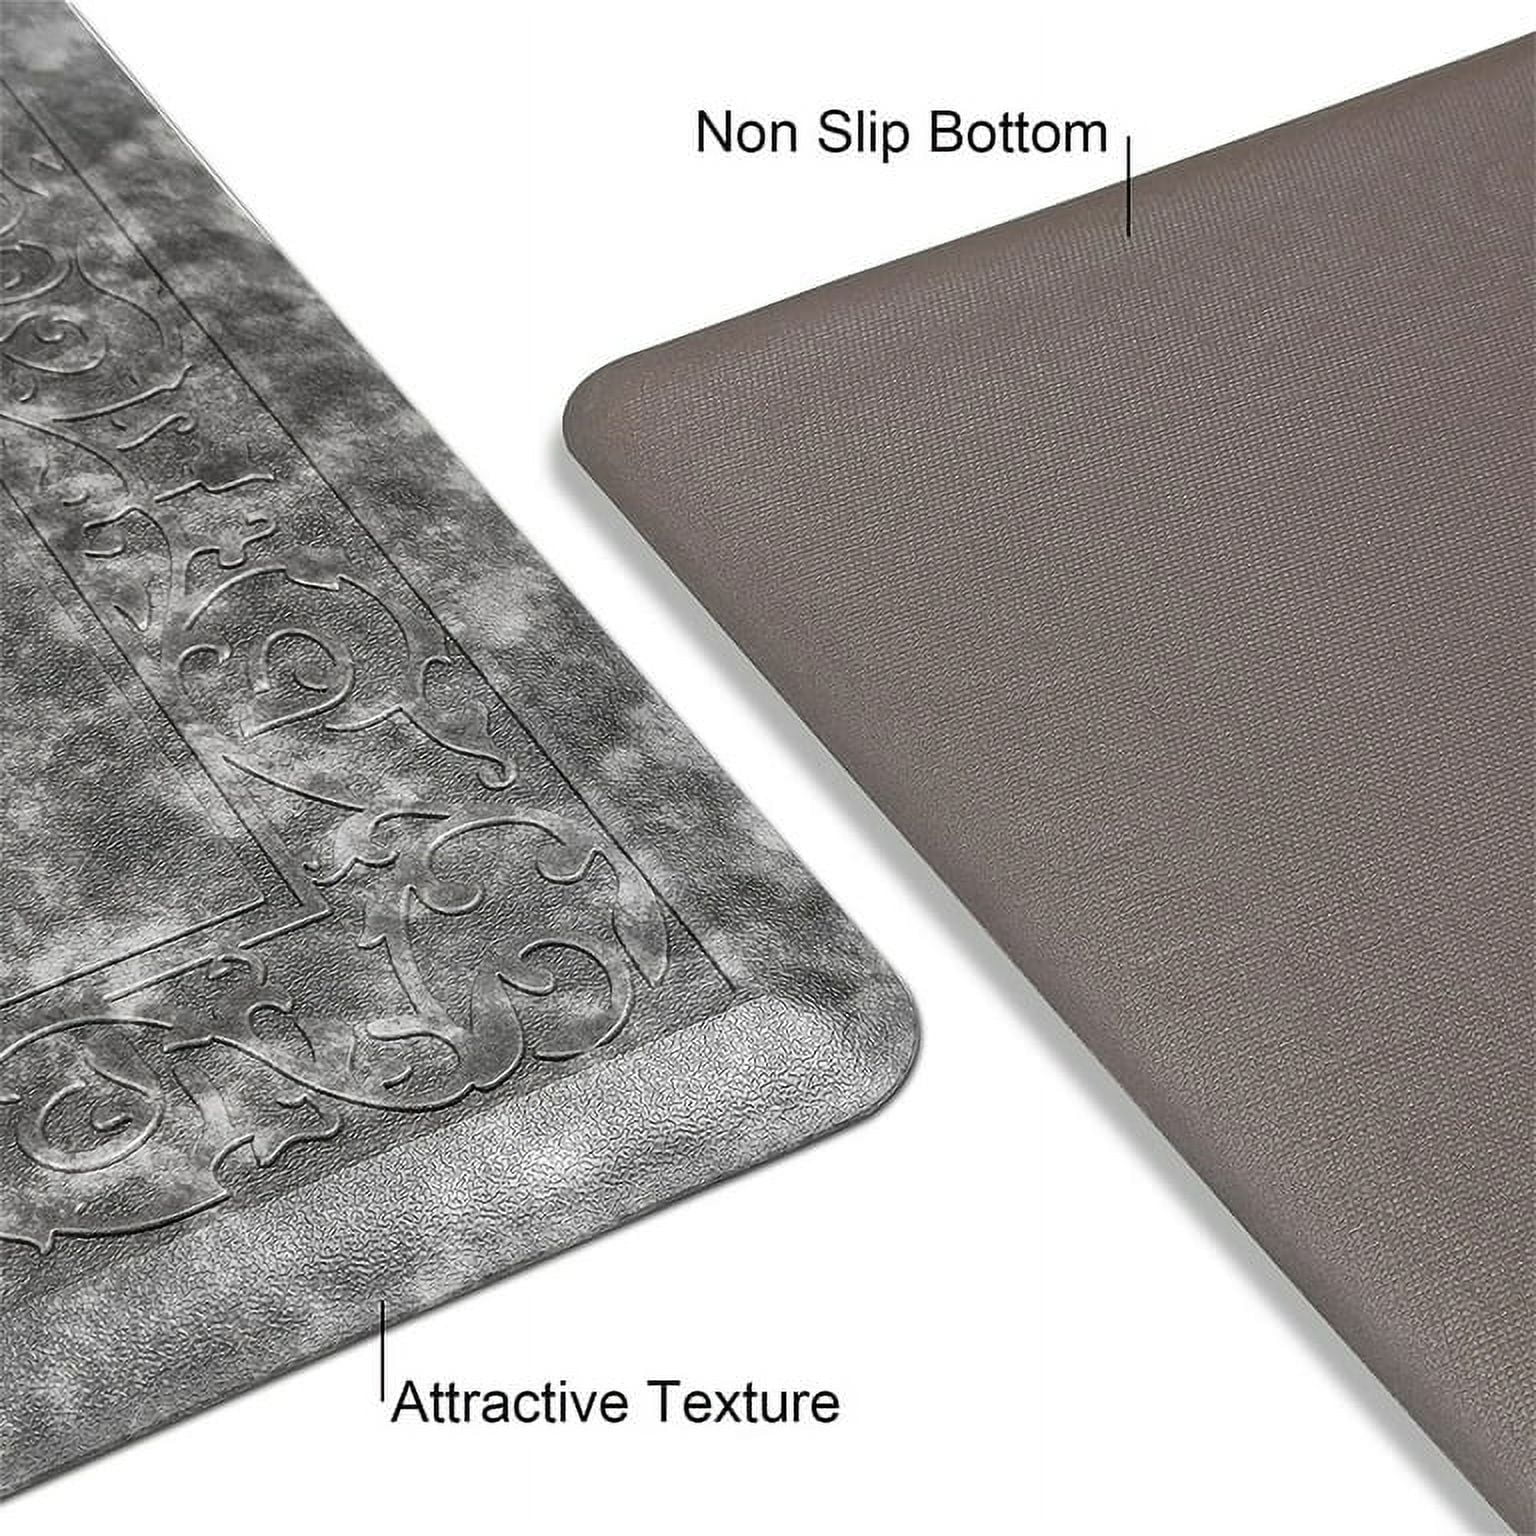 Oversized Cushioned Anti-Fatigue Kitchen Mat (Grateful) – Tuesday